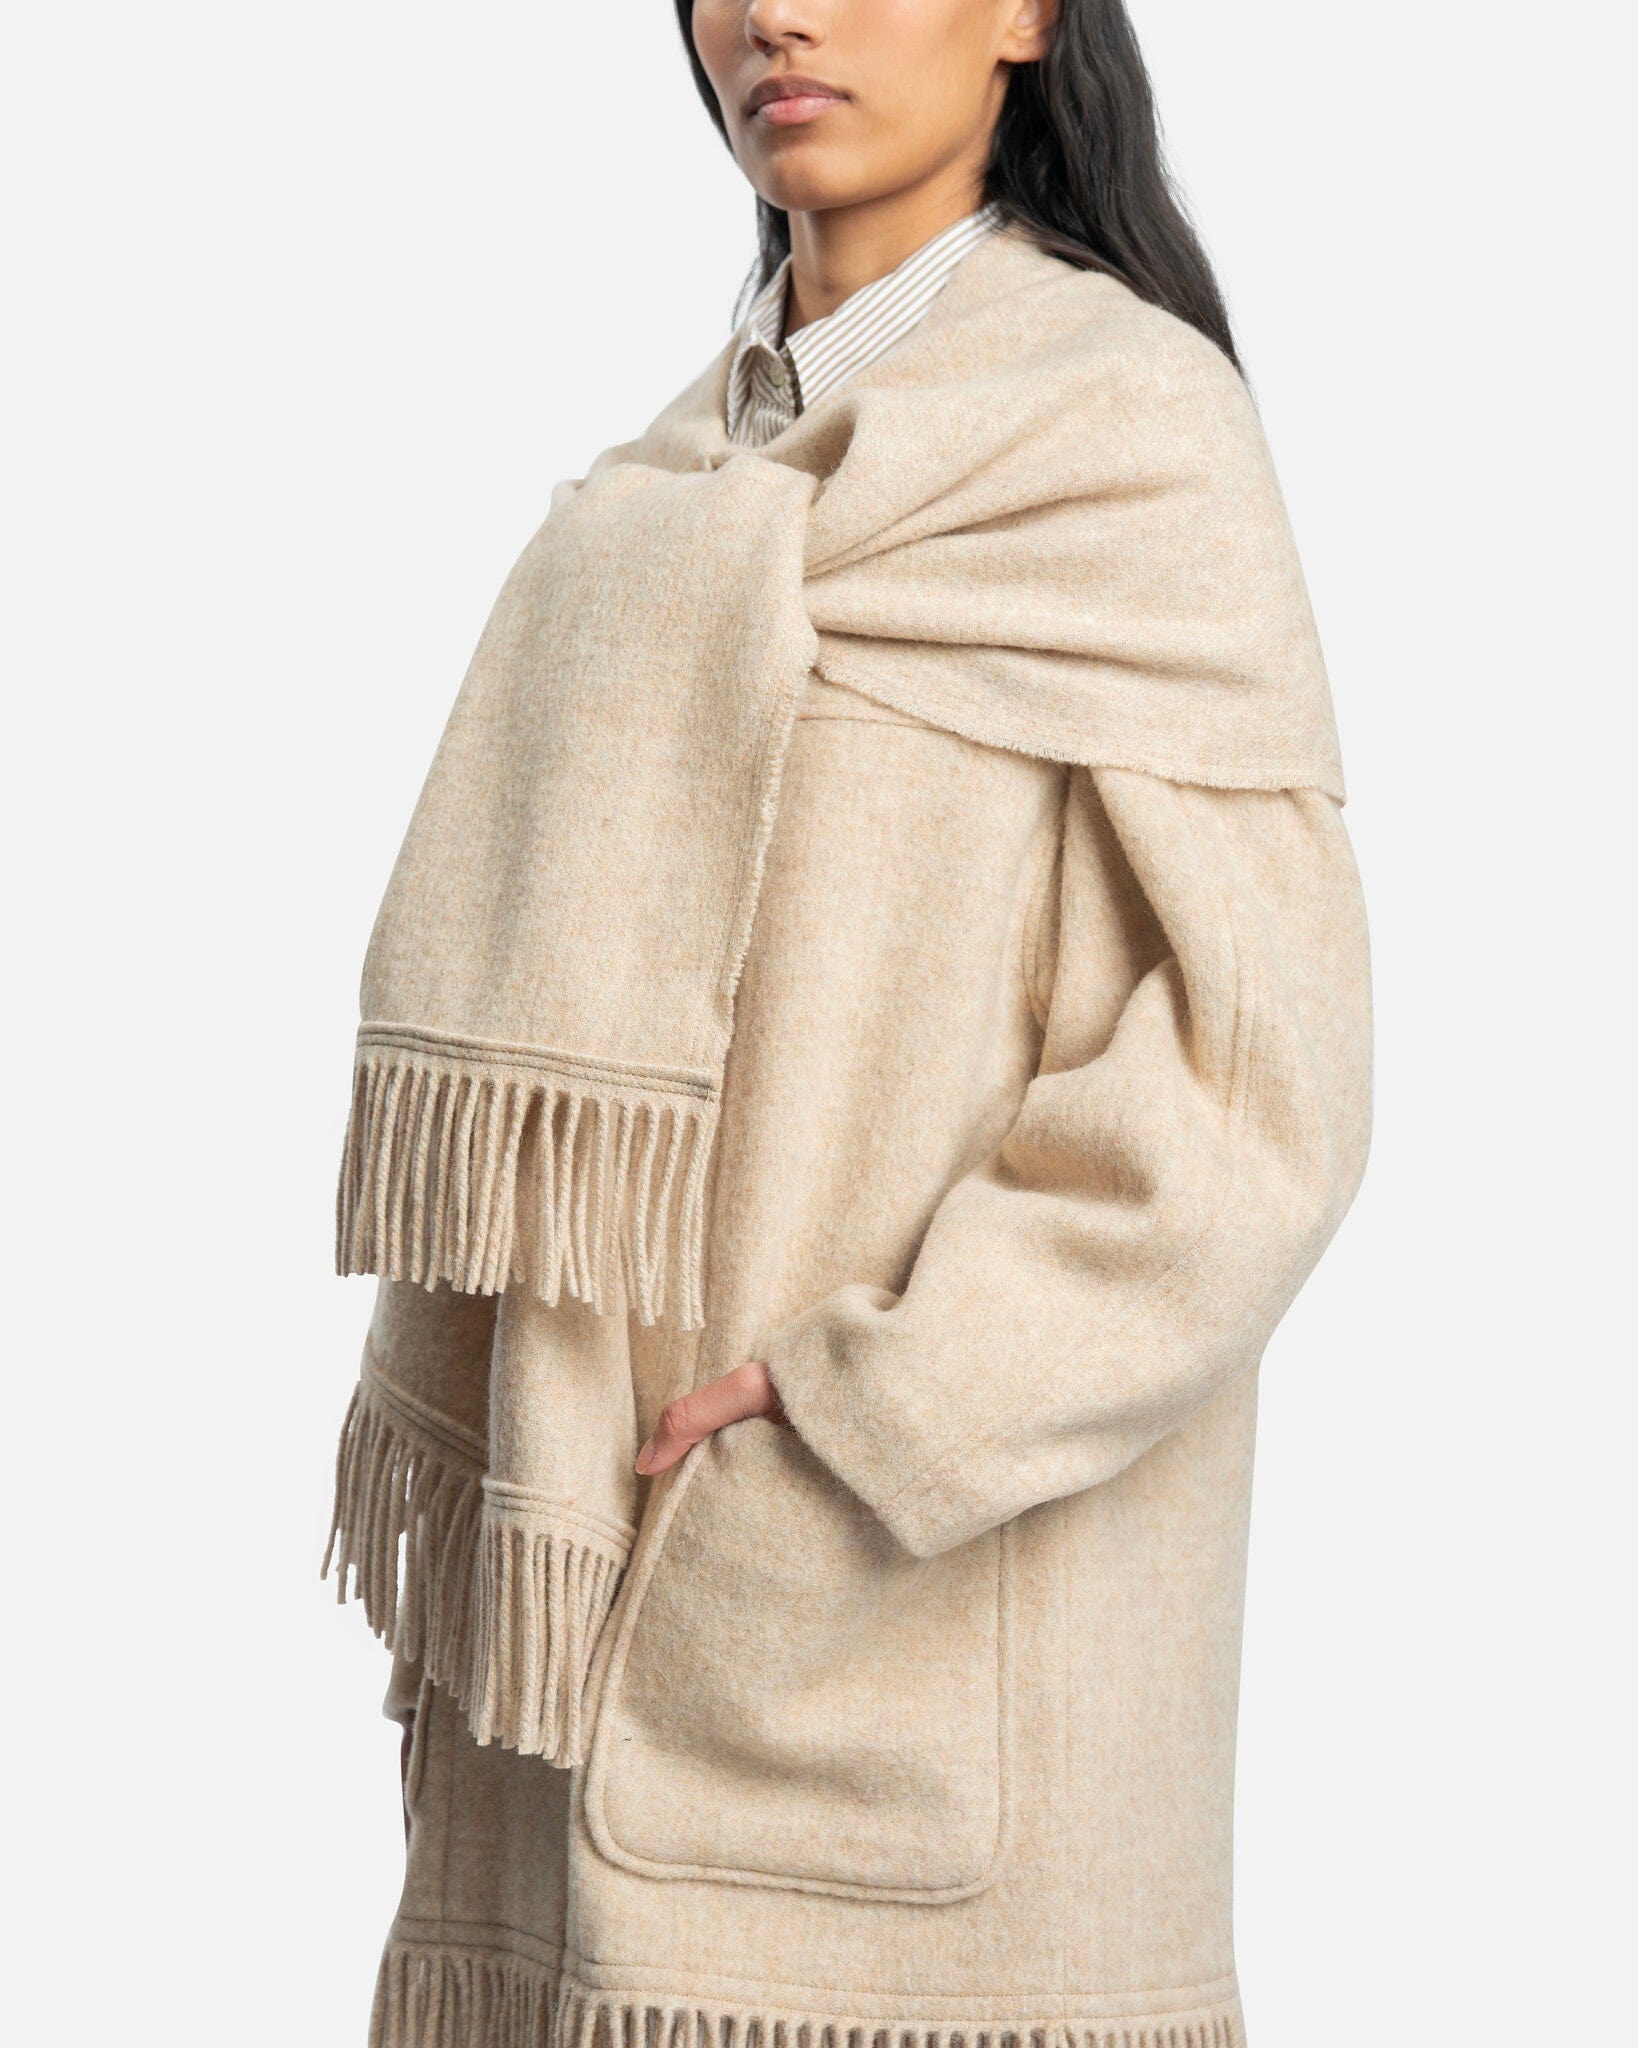 MARANT ETOILE - Faty Wool Blend Coat